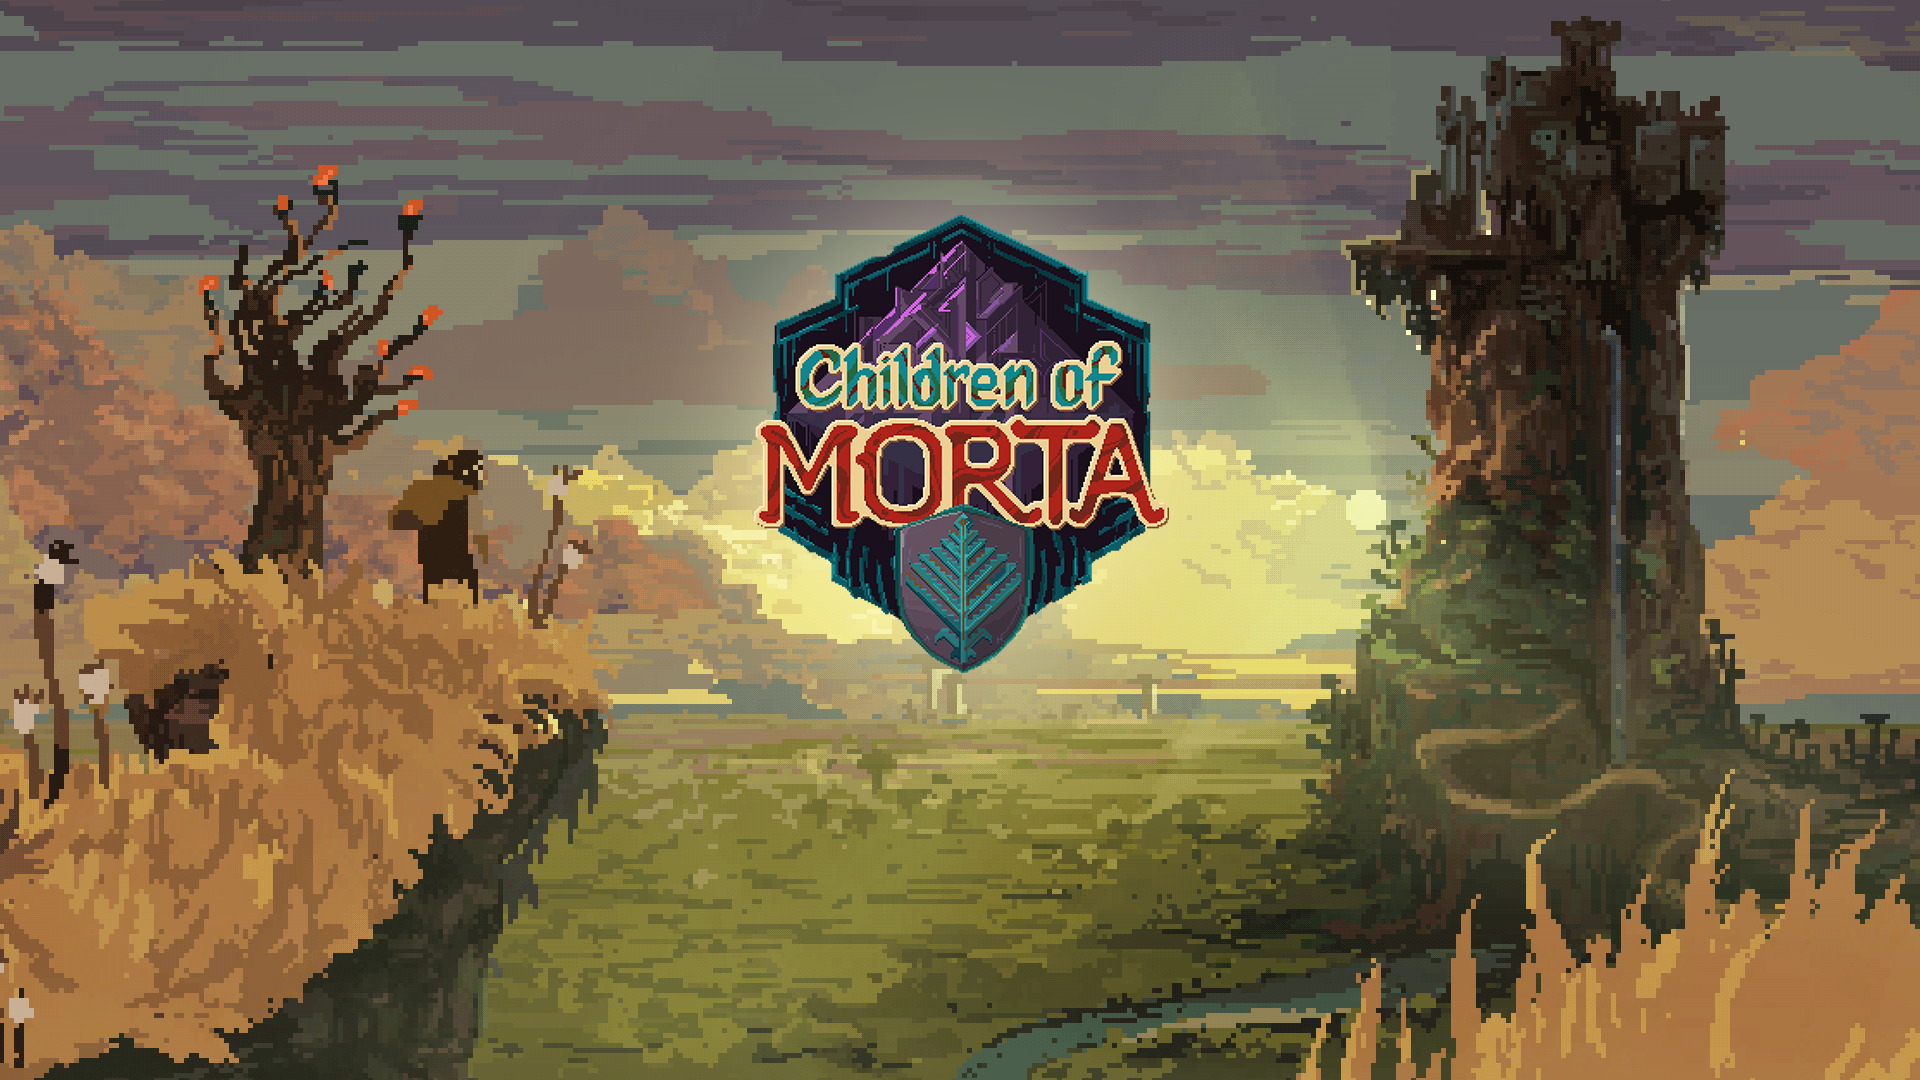 Video Game Children of Morta HD Wallpaper | Background Image